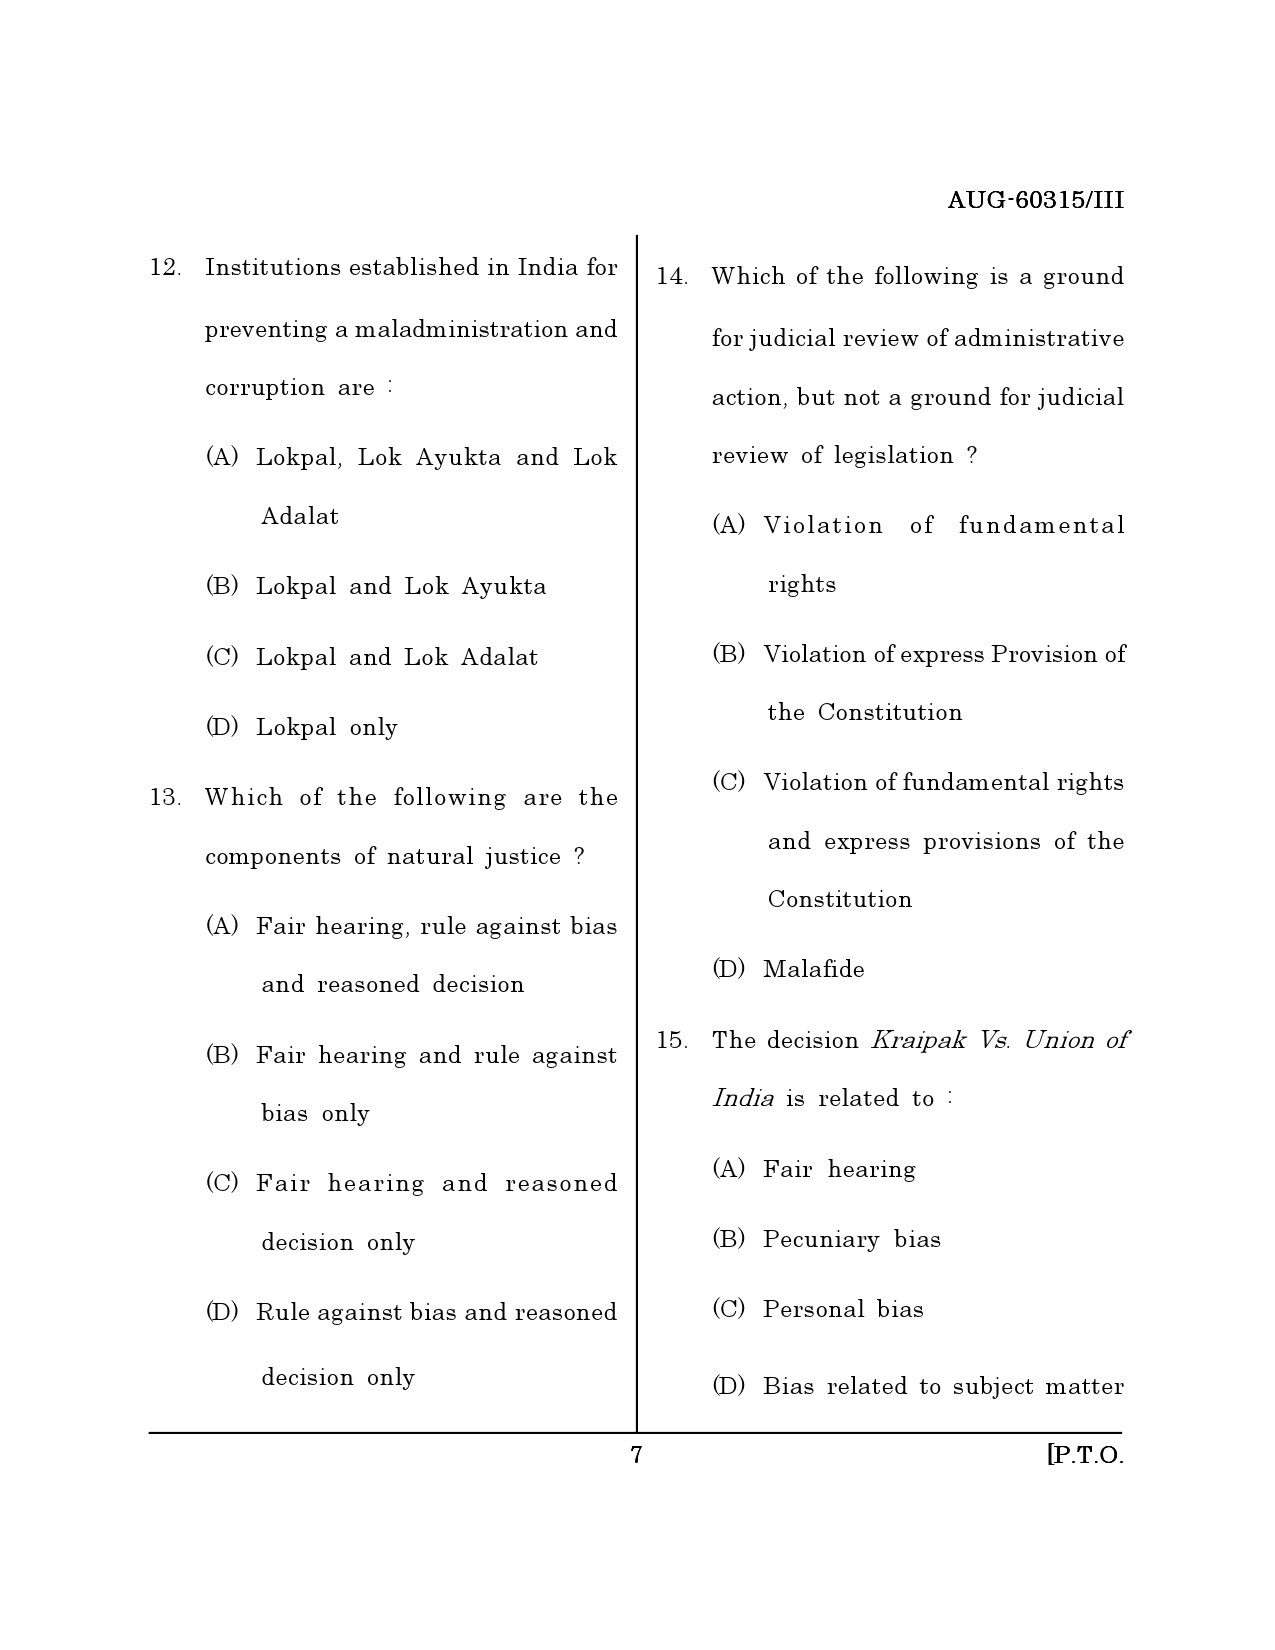 Maharashtra SET Law Question Paper III August 2015 6